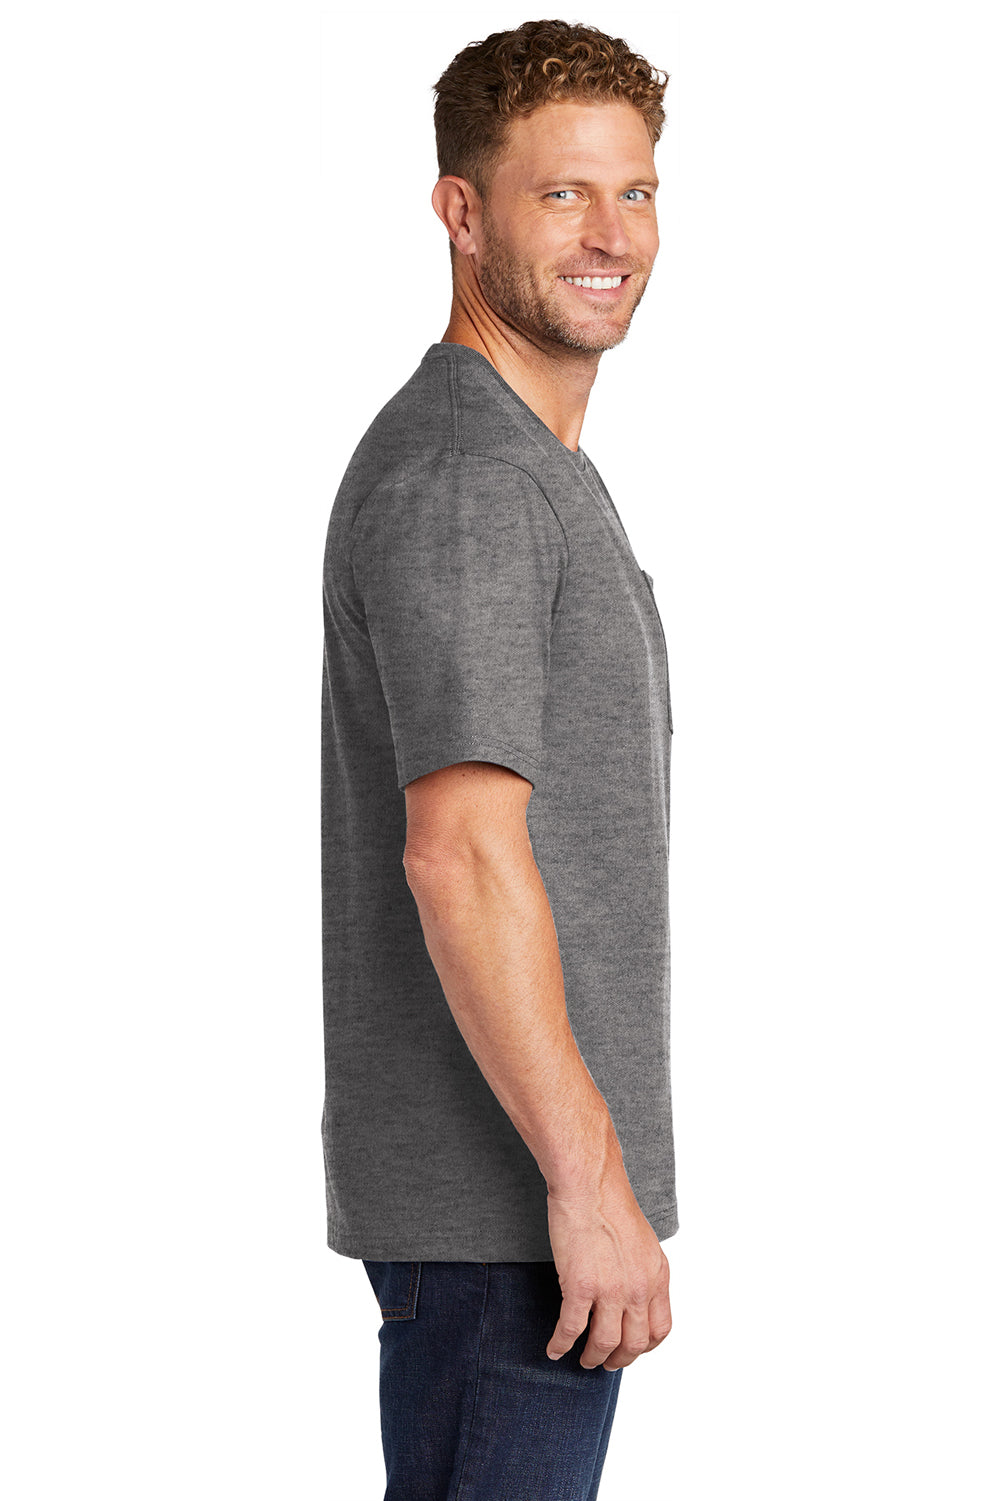 CornerStone Mens Short Sleeve Crewneck T-Shirt w/ Pocket Heather Charcoal Grey Side